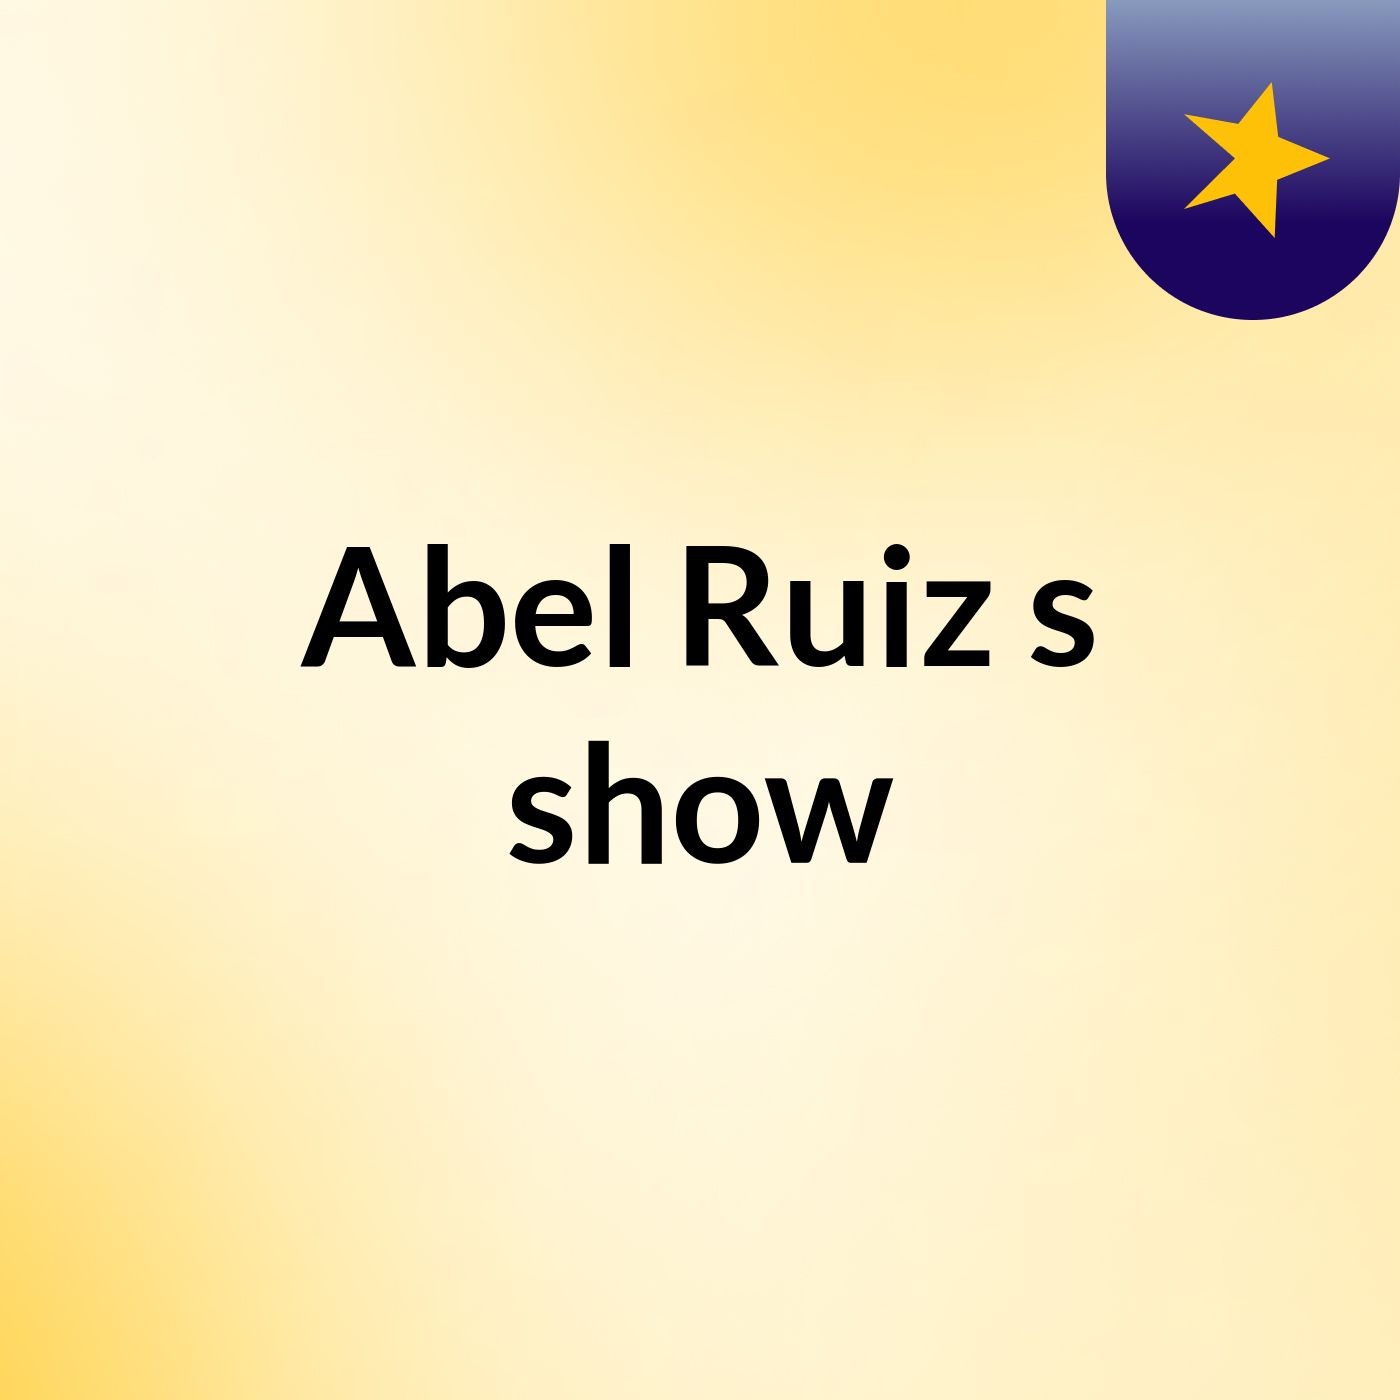 Abel Ruiz's show